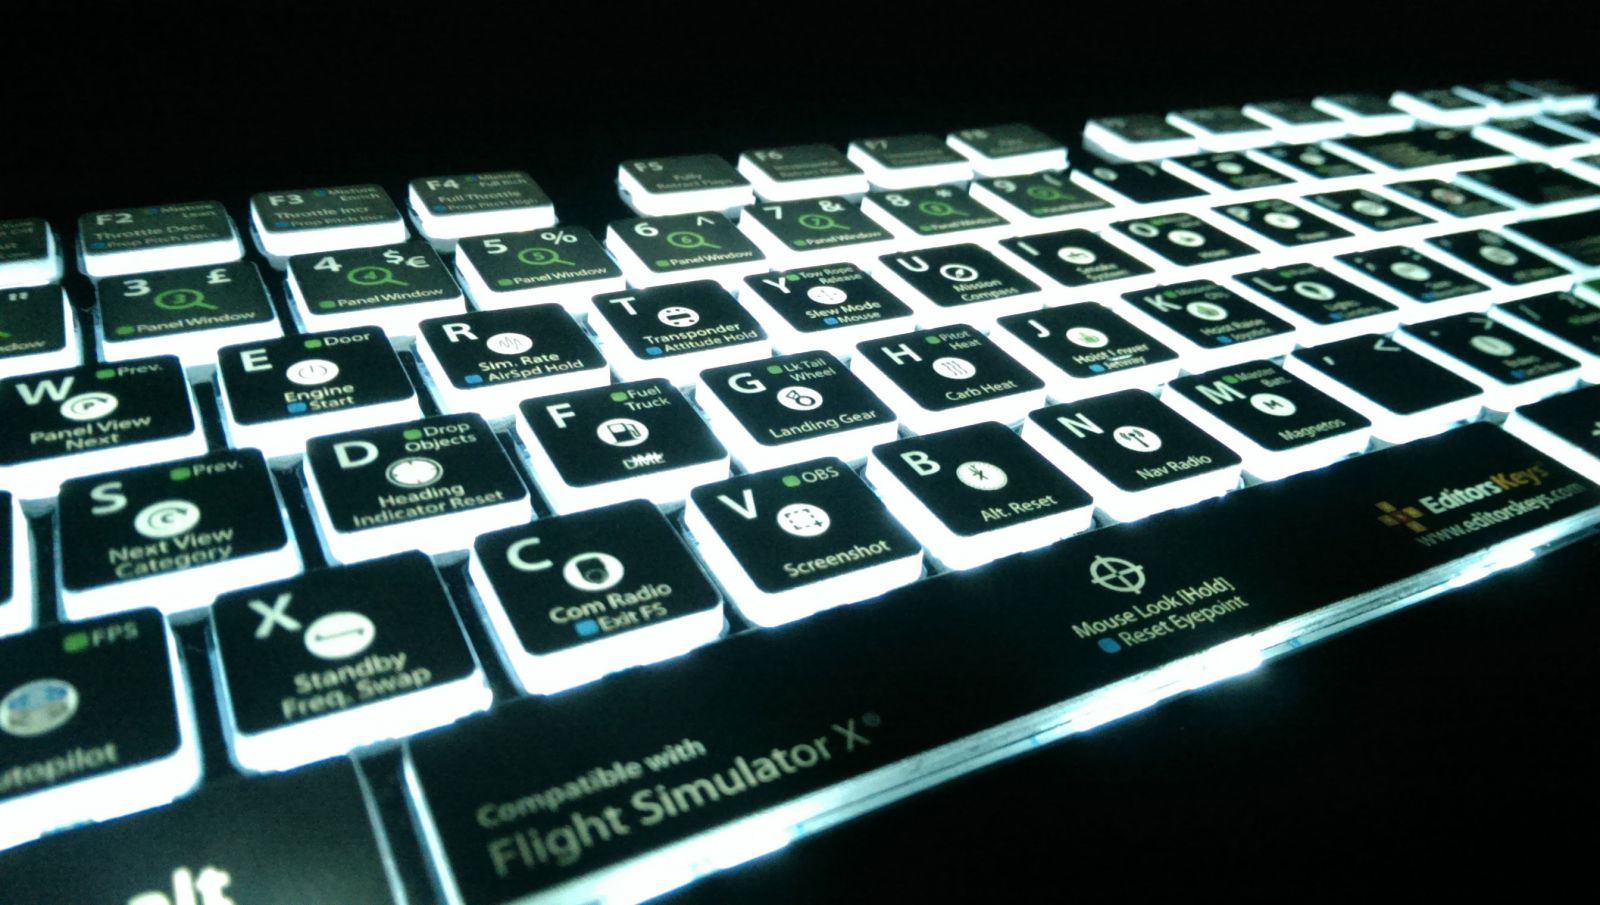 The dedicated backlit keyboard for Microsoft Flight Simulator X